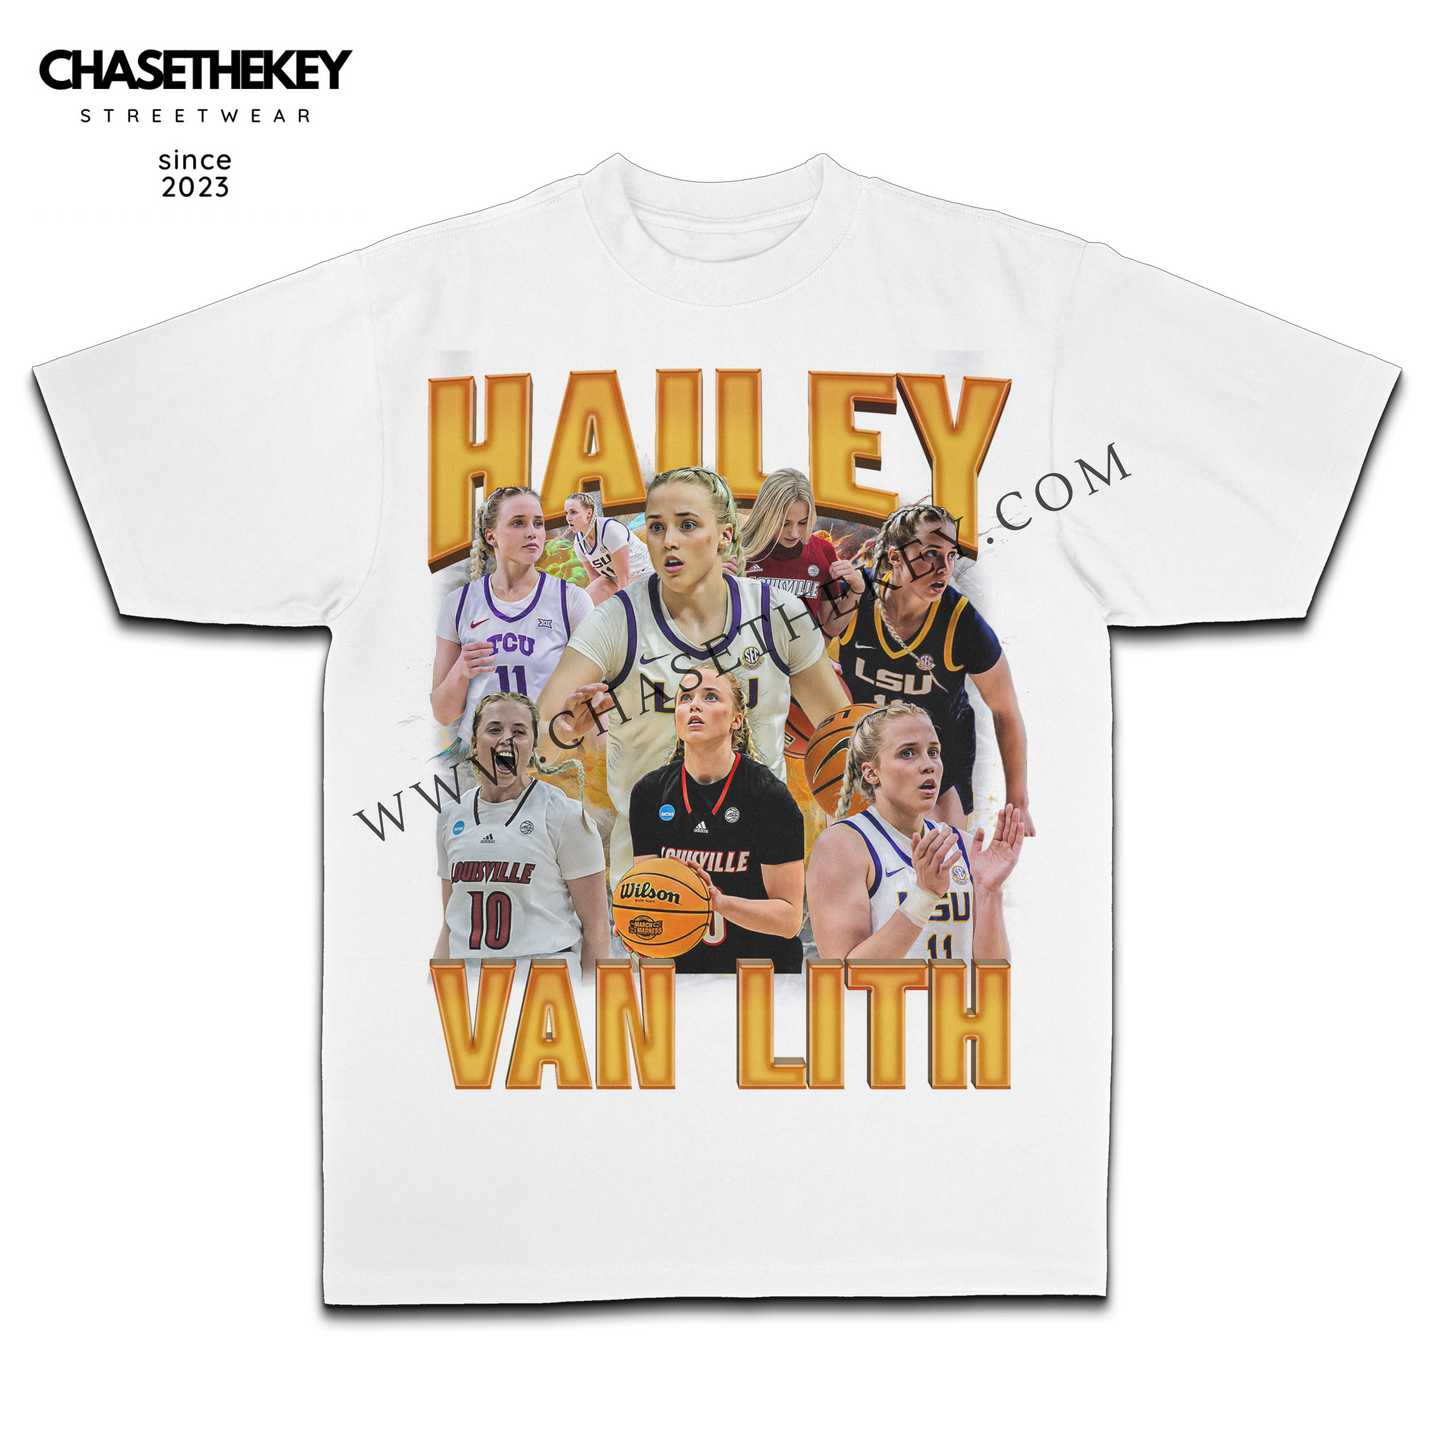 Hailey Van Lith Shirt